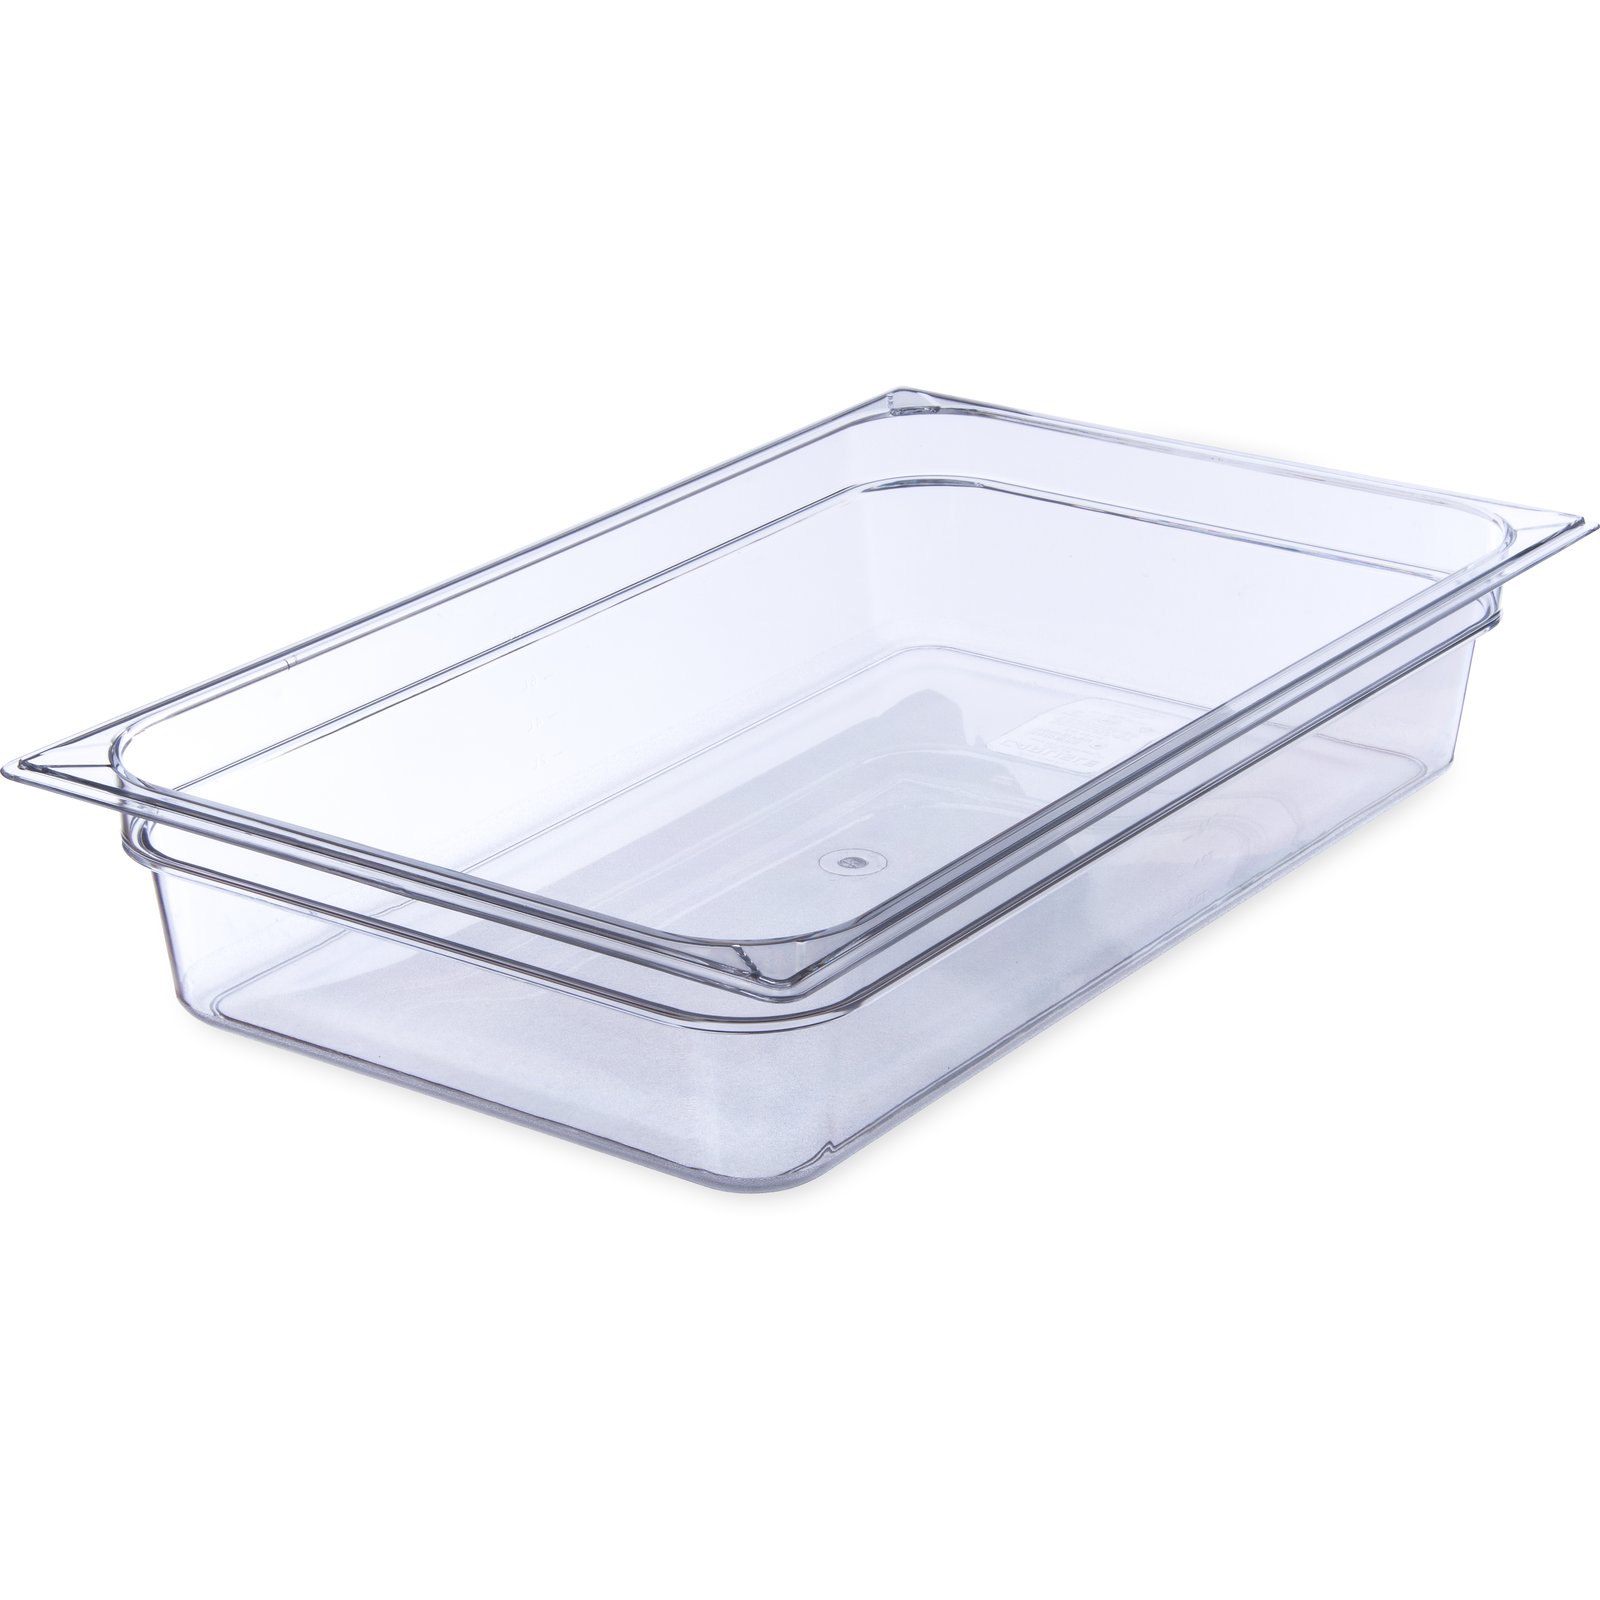 TRUST 4-liter heat-resistant transparent glass cookware, No. HRG071 